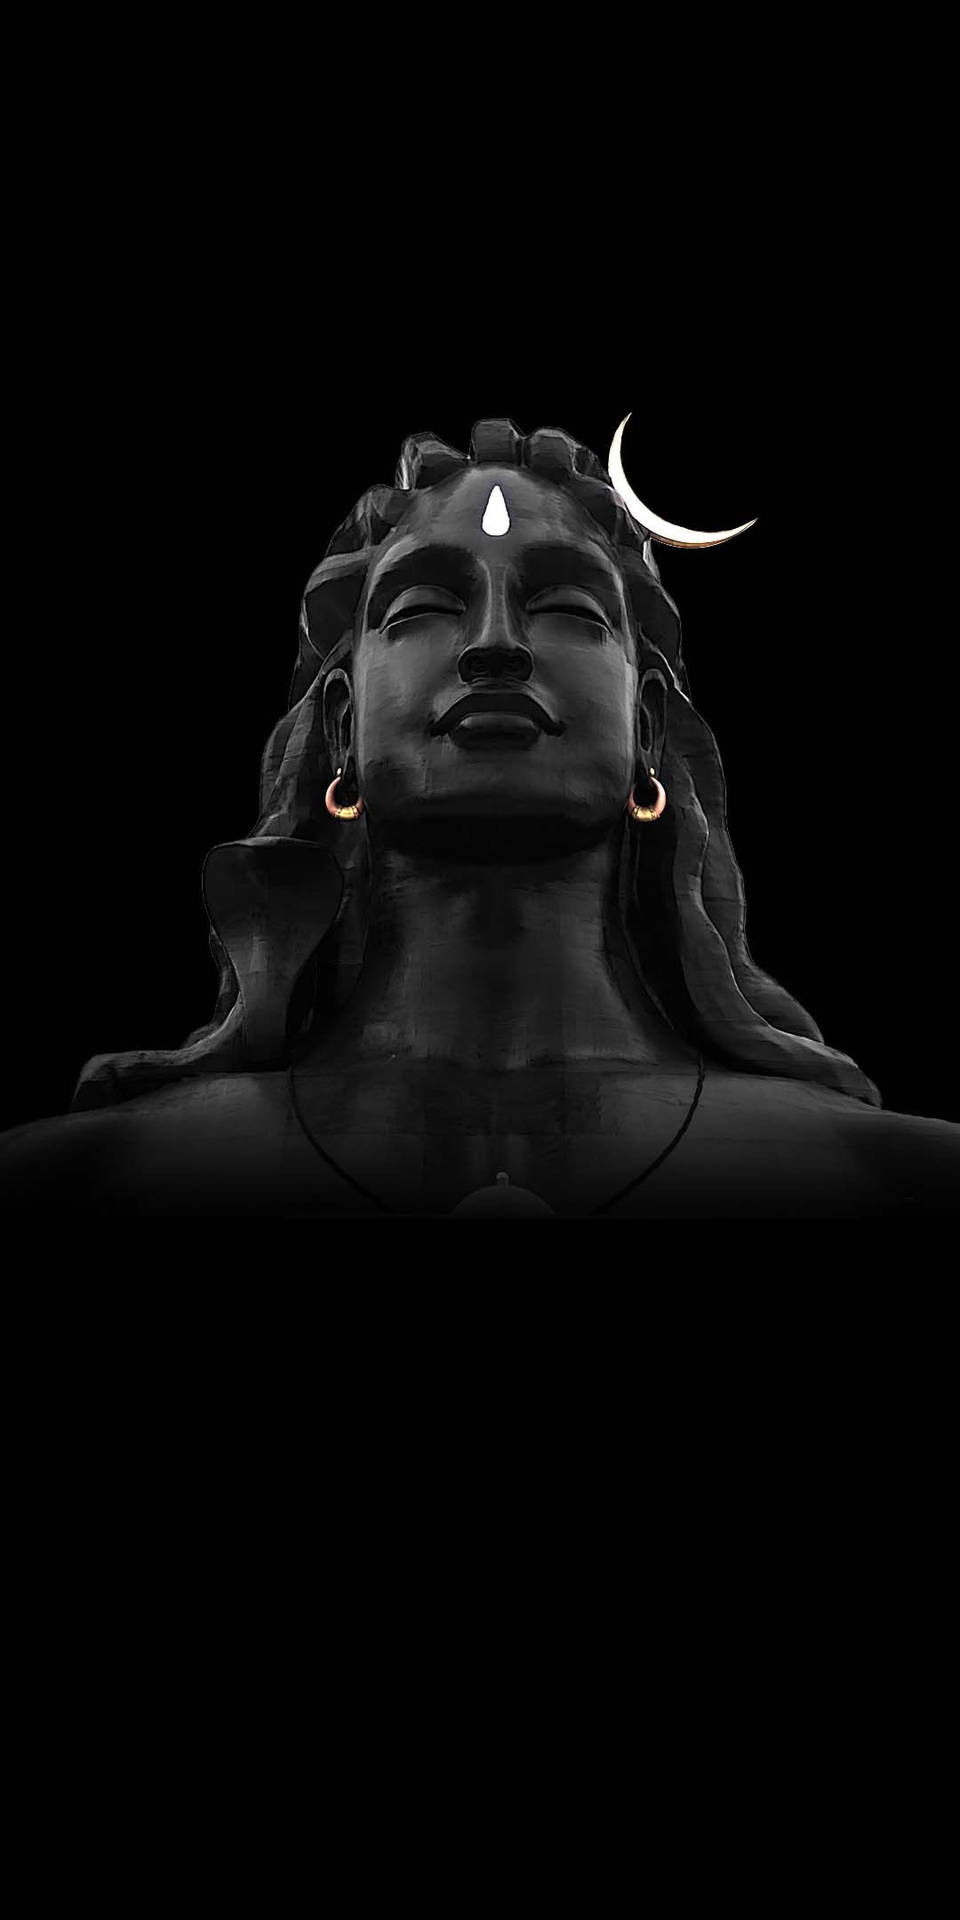 Bholenath Hd Wallpaper Black  Bholenath Hd Wallpaper  Shiva wallpaper  Lord shiva hd wallpaper Shiva lord wallpapers